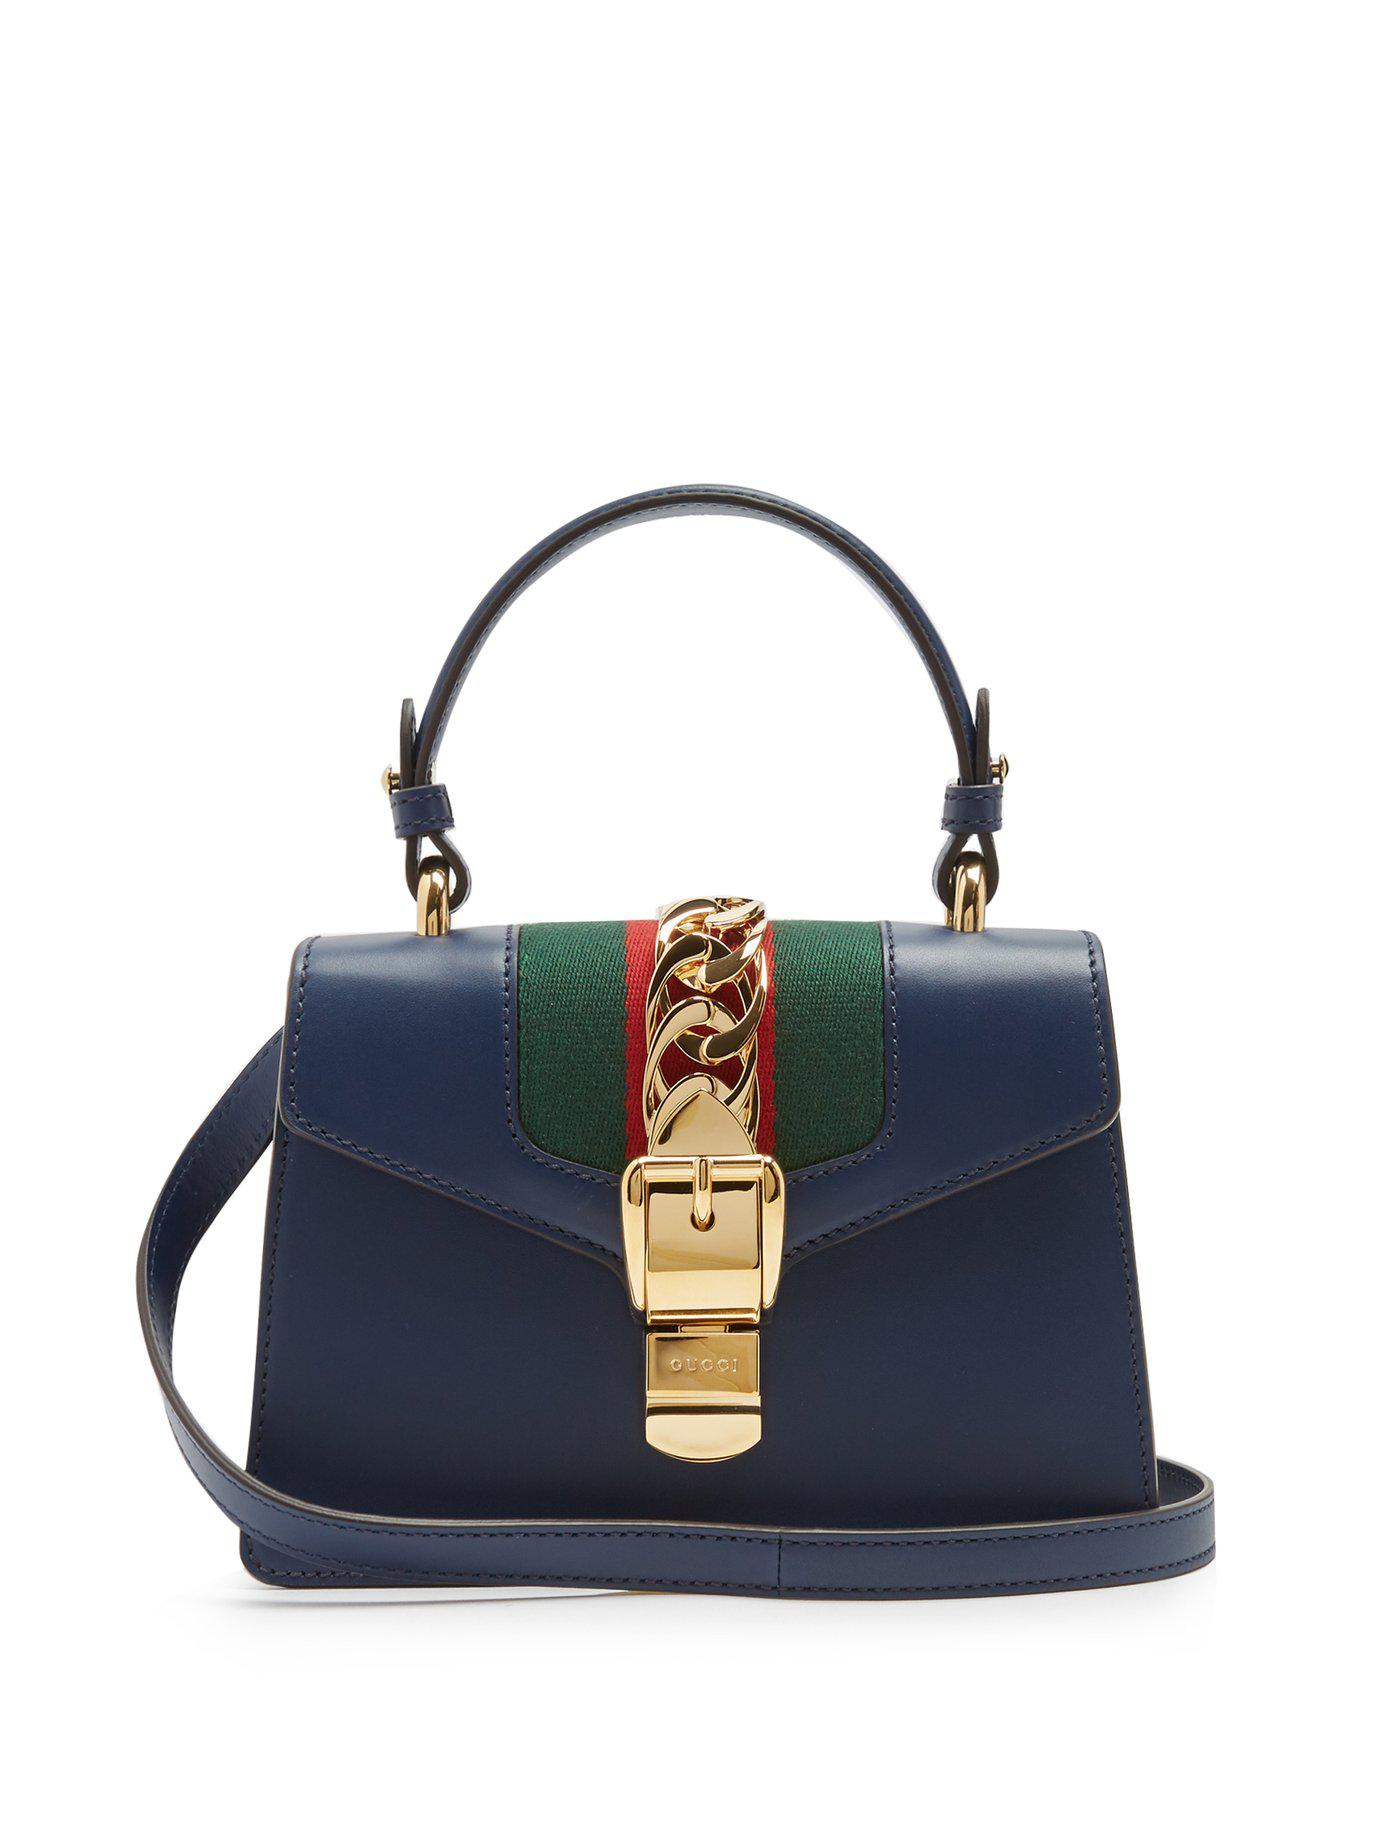 Gucci Sylvie Mini Leather Shoulder Bag 